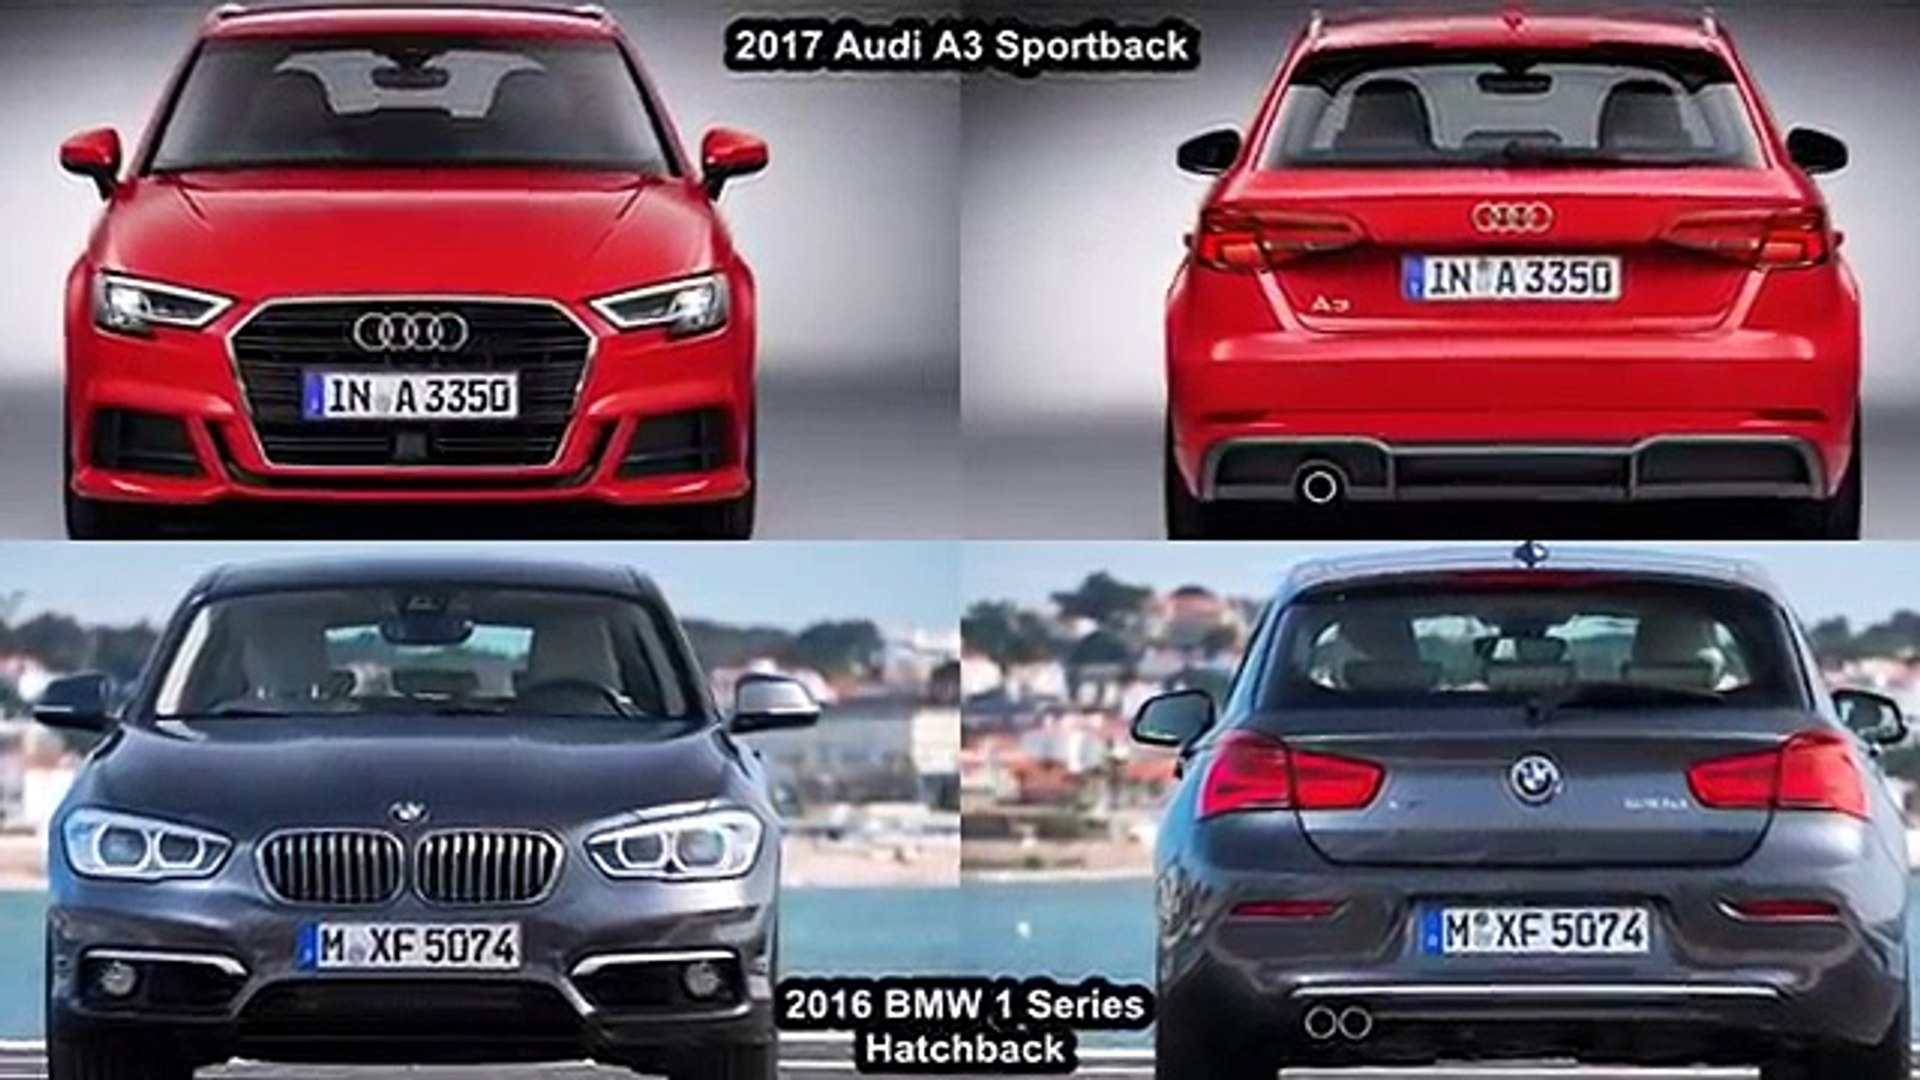 2017 Audi A3 Sportback Vs 2016 BMW 1 Series Hatchback - DESIGN! – Видео  Dailymotion